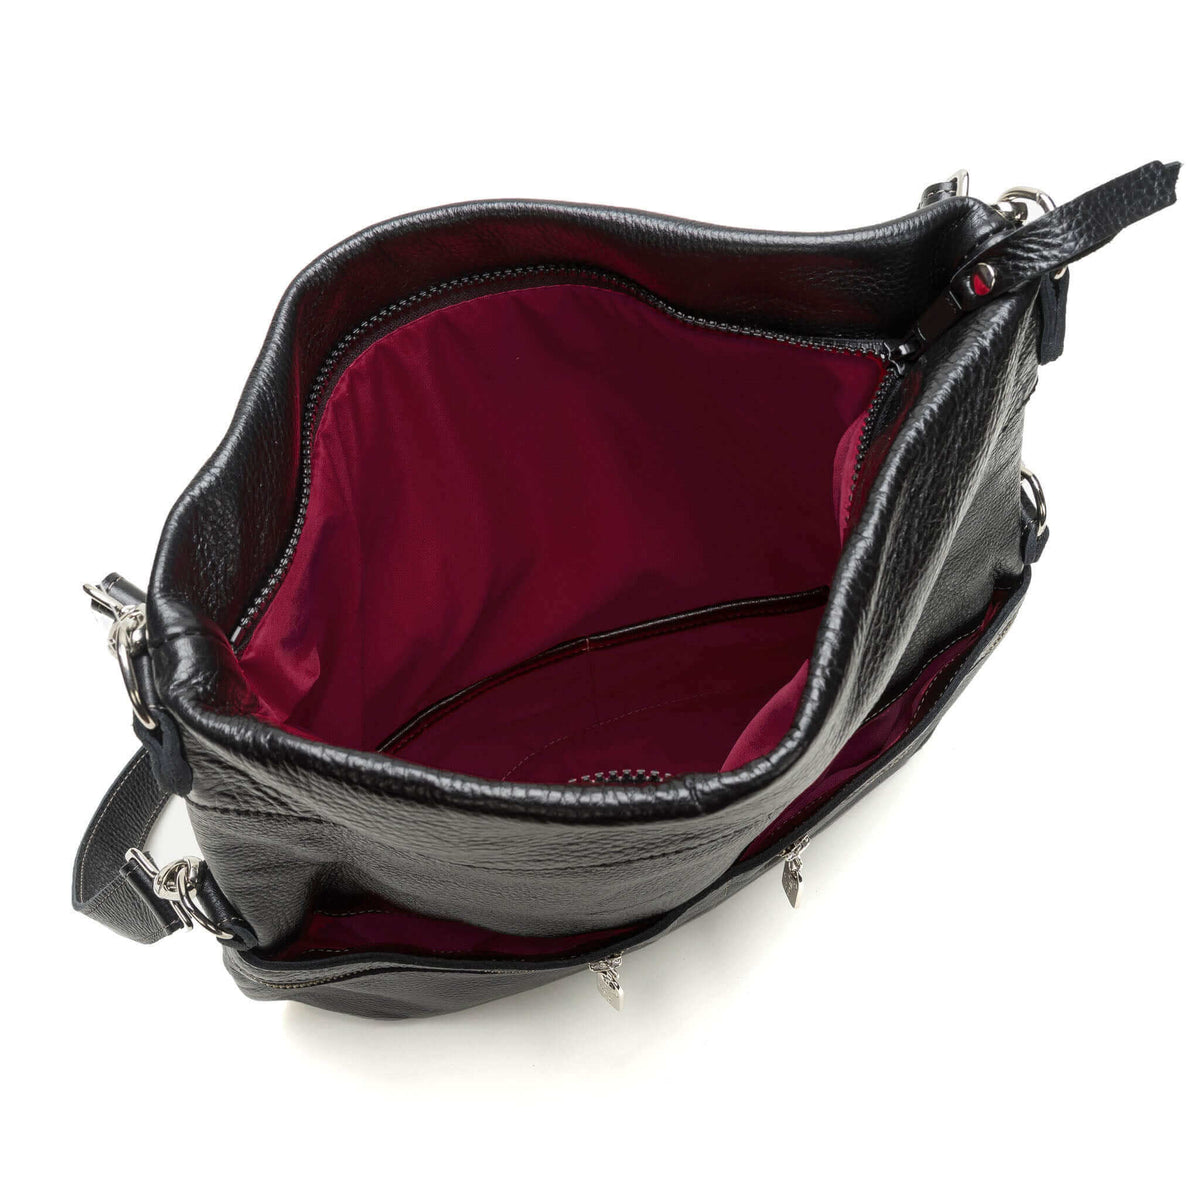 6-in-1 leather crossbody backpack - Brynn Capella, USA